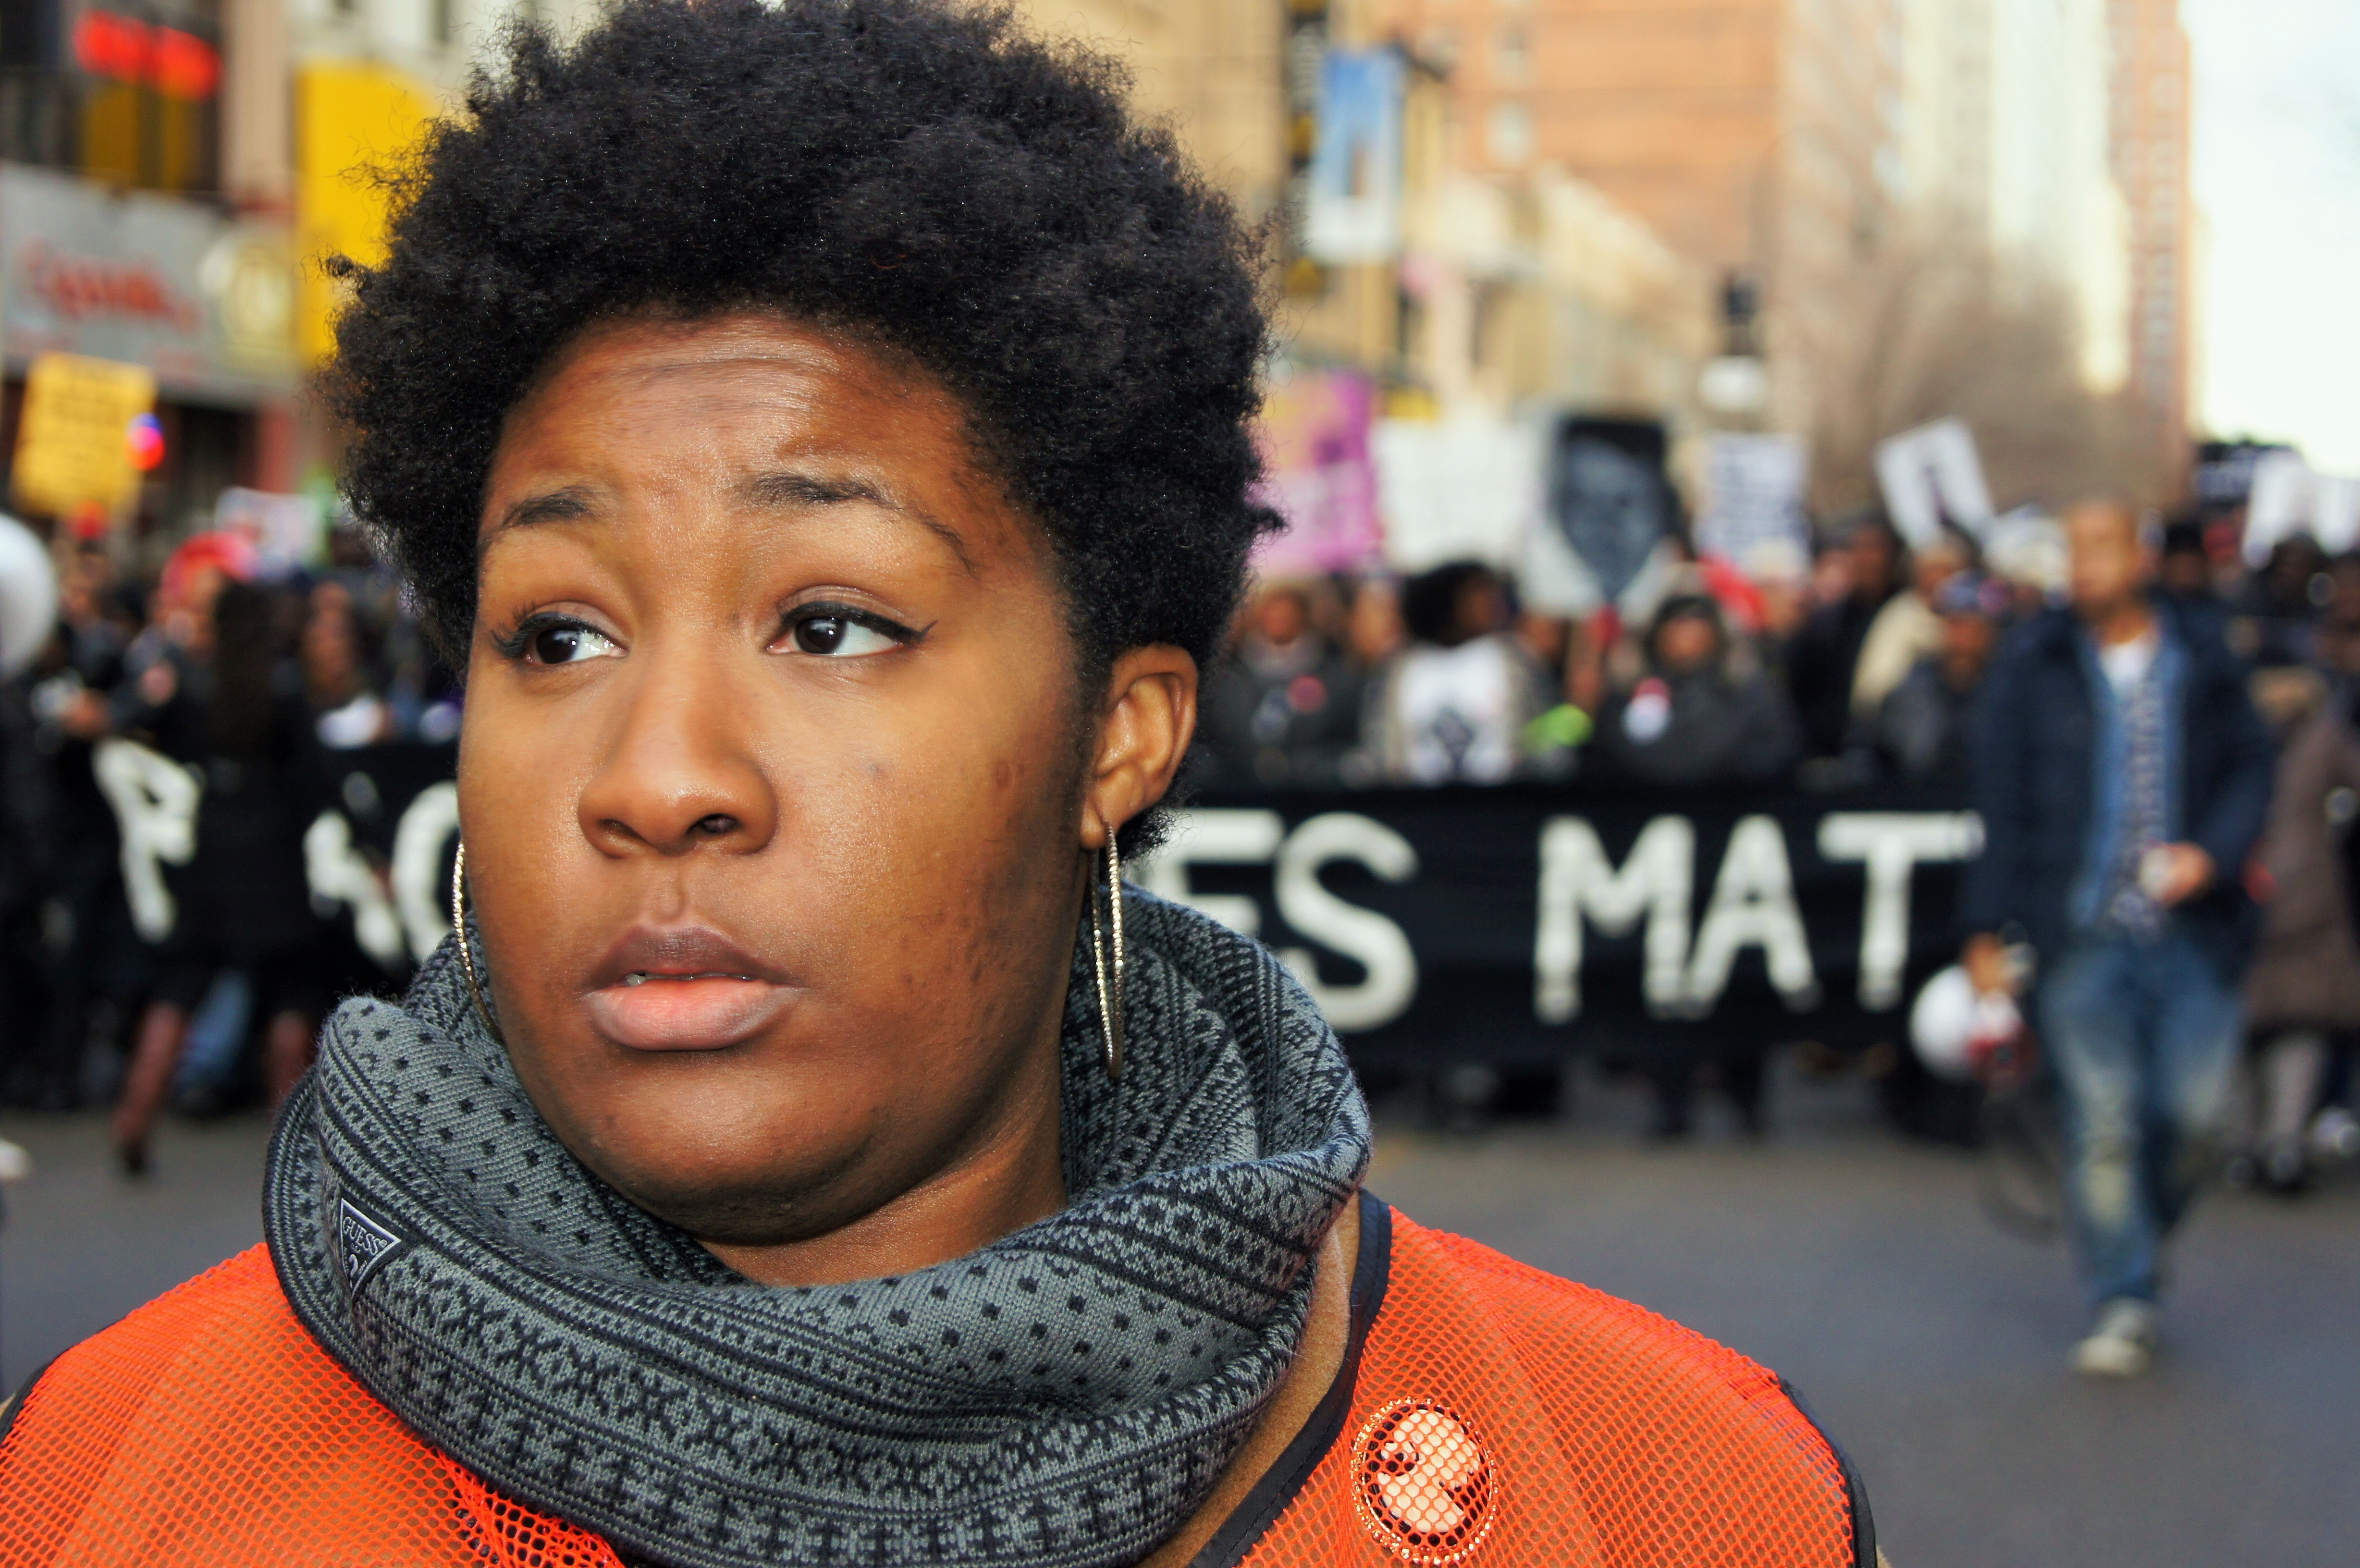 BlackHer: A New Online Platform Raises the Voices of Black Women Politically and Economically